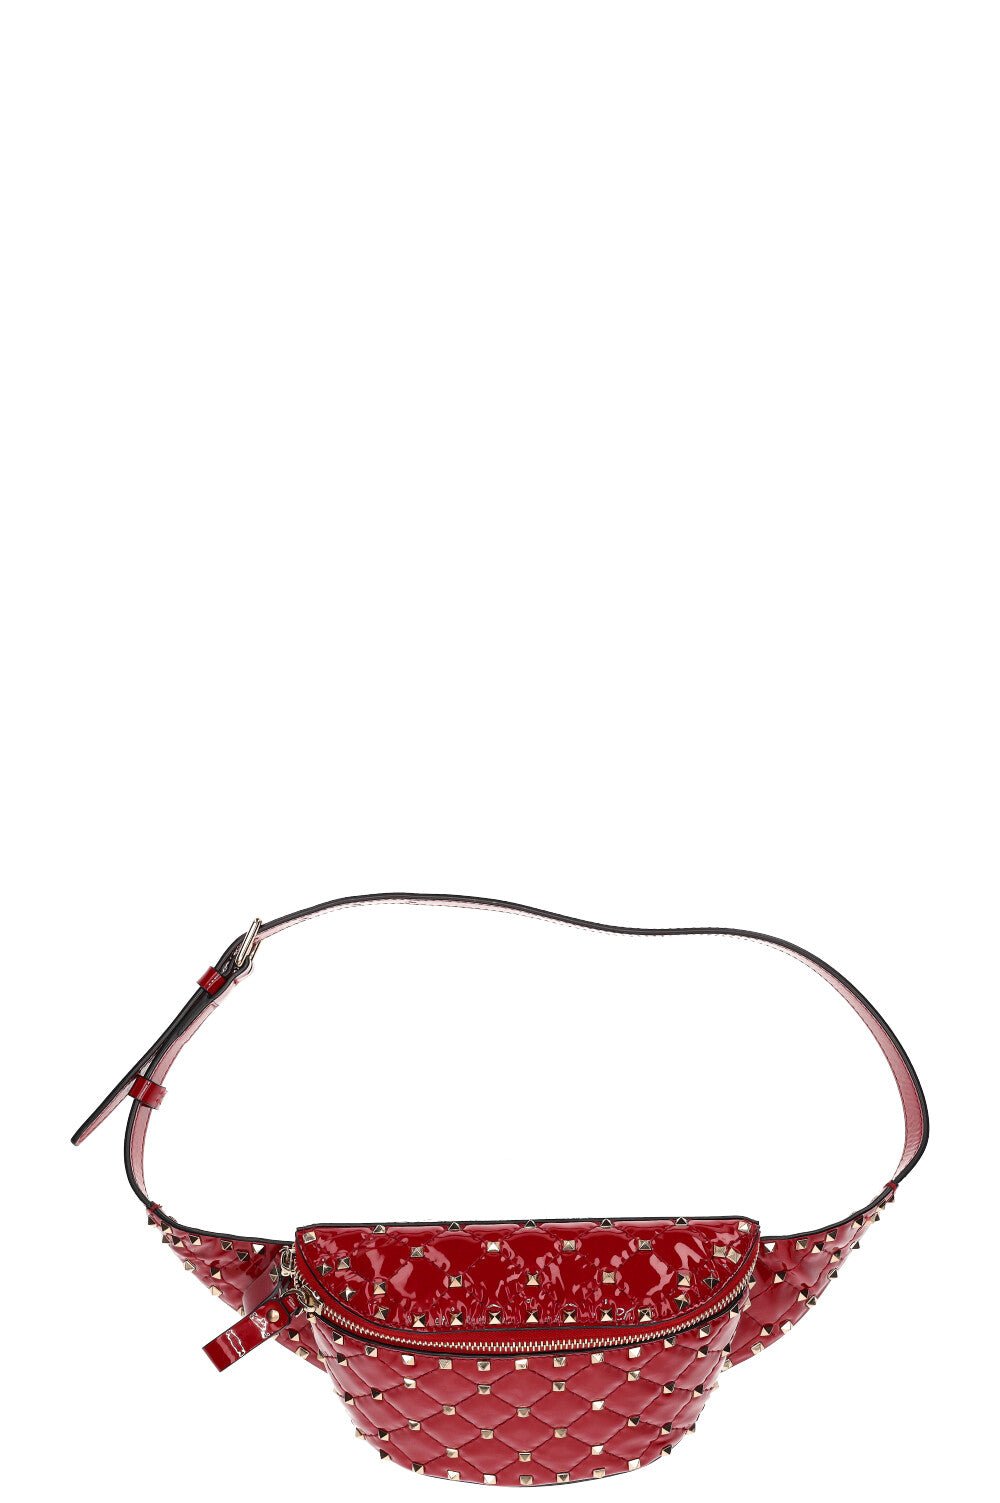 VALENTINO Rockstud Patent Belt Bag Red